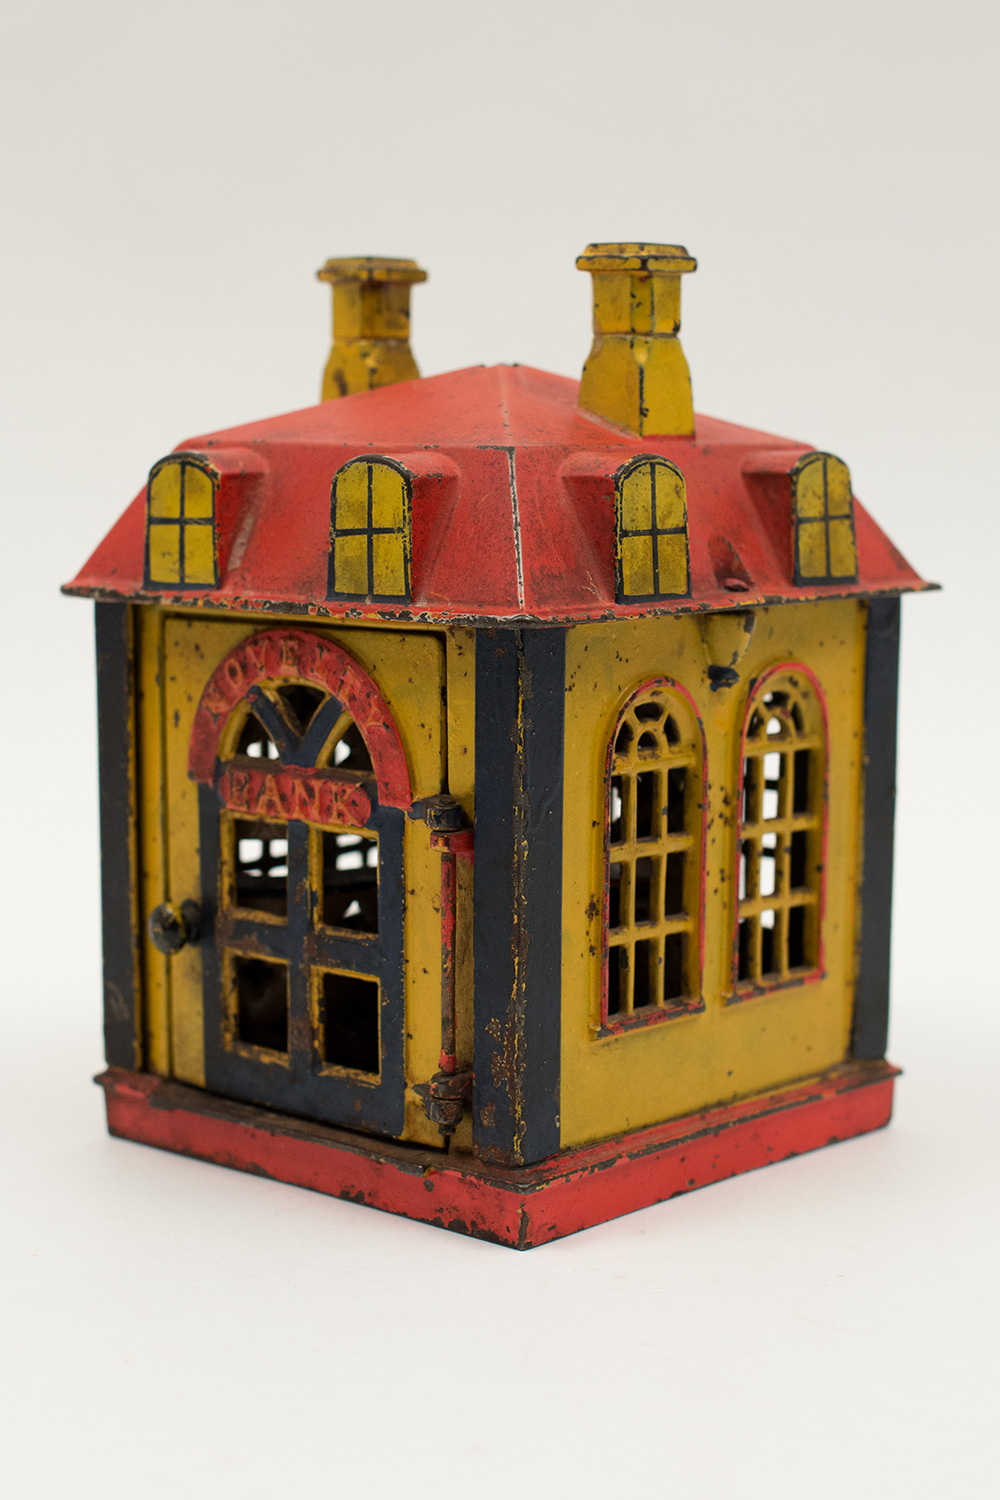 Novelty Bank Antique Cast Iron Mechanical Bank in All Original Paint